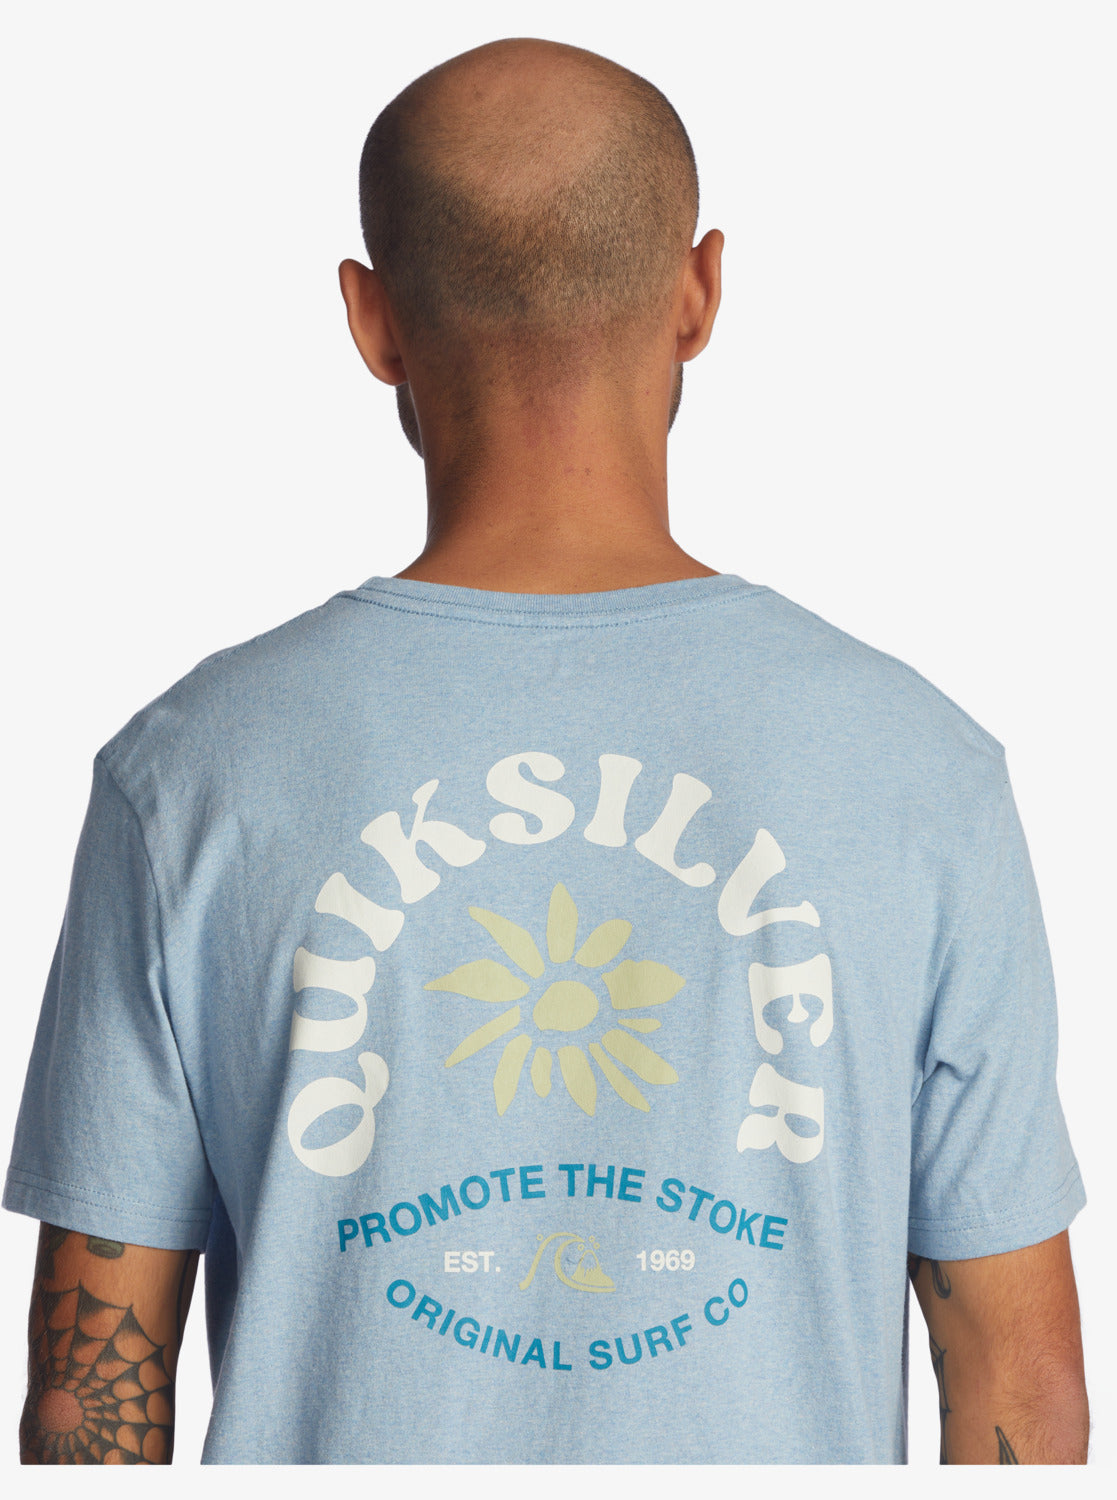 Tees Promote Stoke - T-shirt Simple Quiksilver Script the